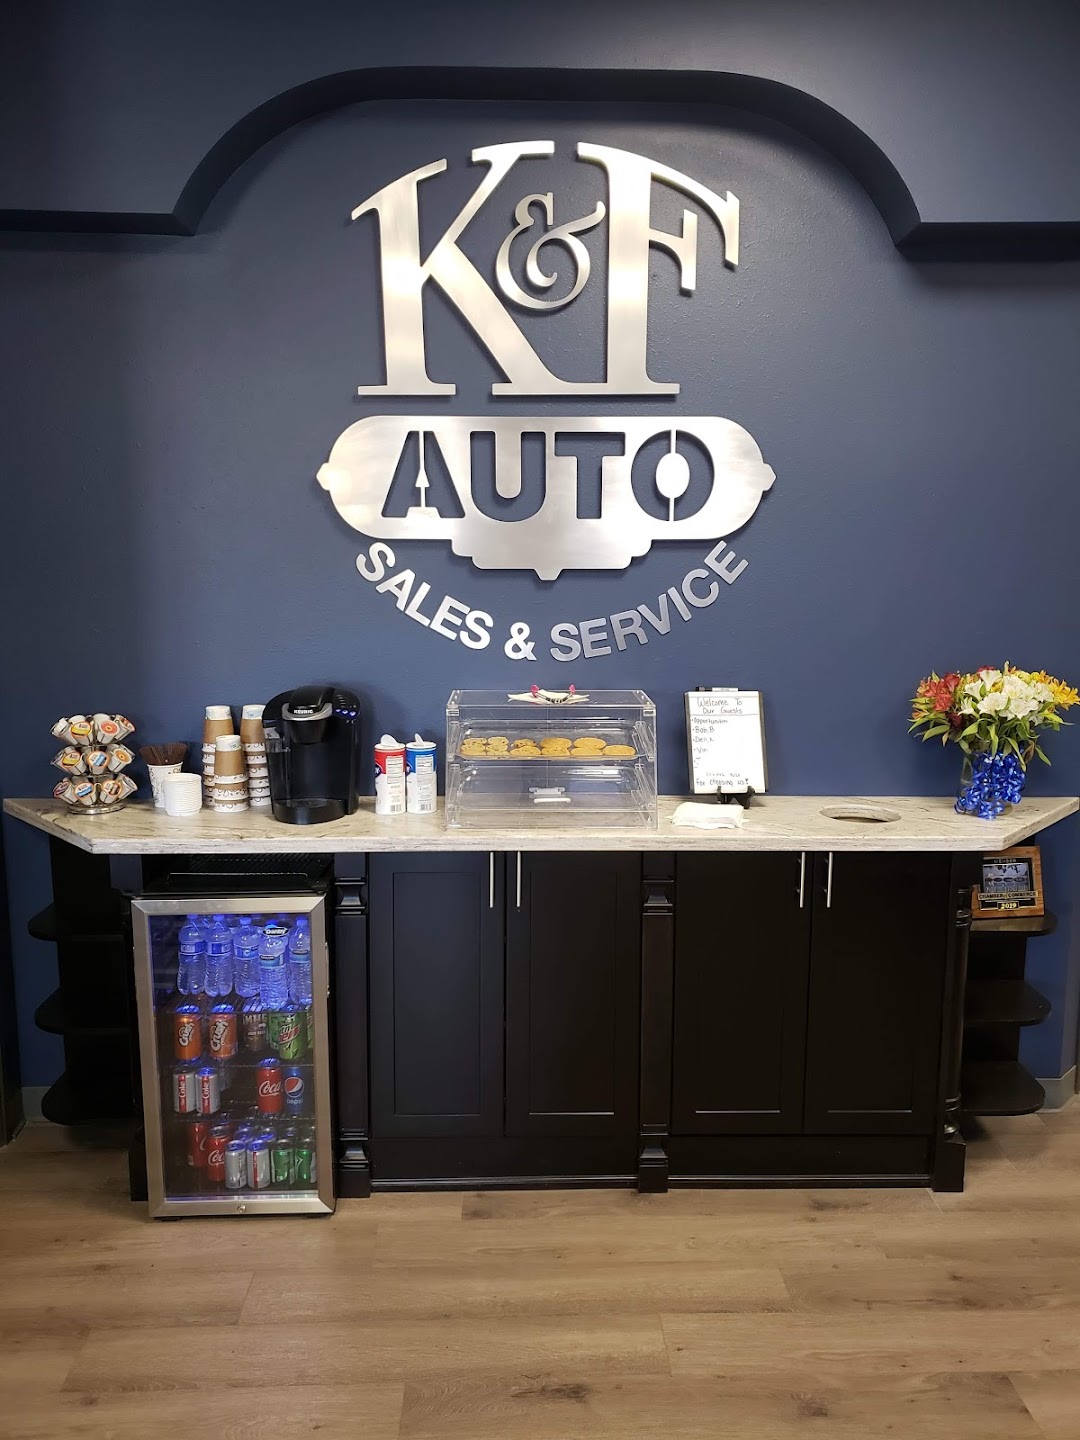 K&F Auto Sales and Service